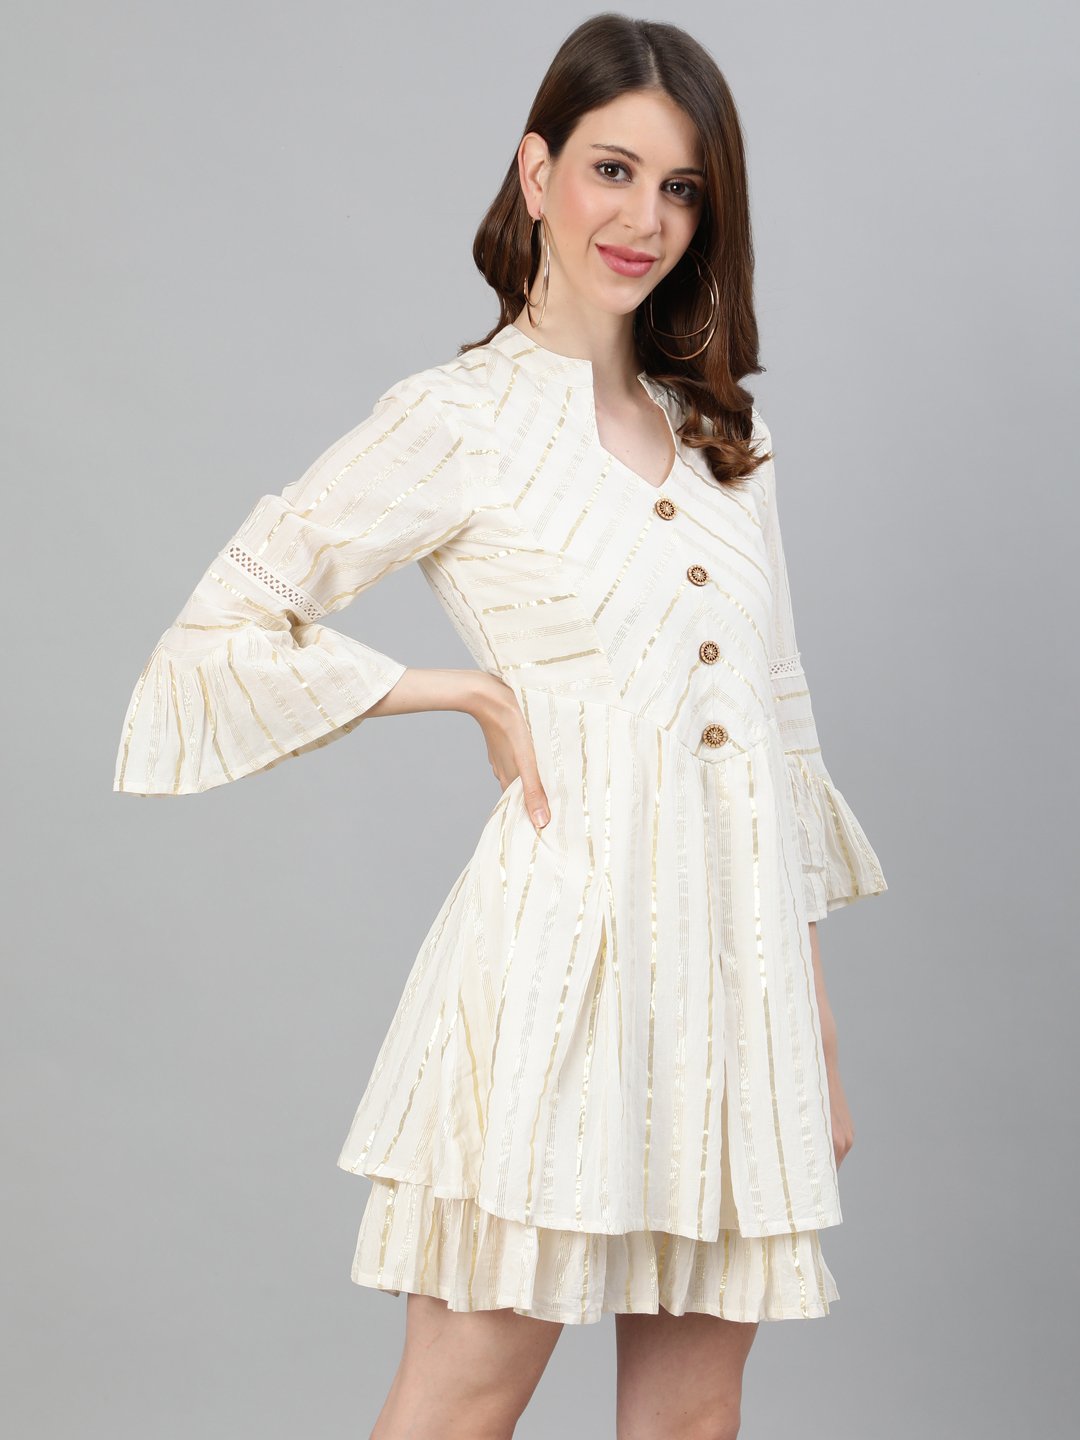 Ishin Women's Cotton Off White Lurex Embellished A-Line Layered Dress